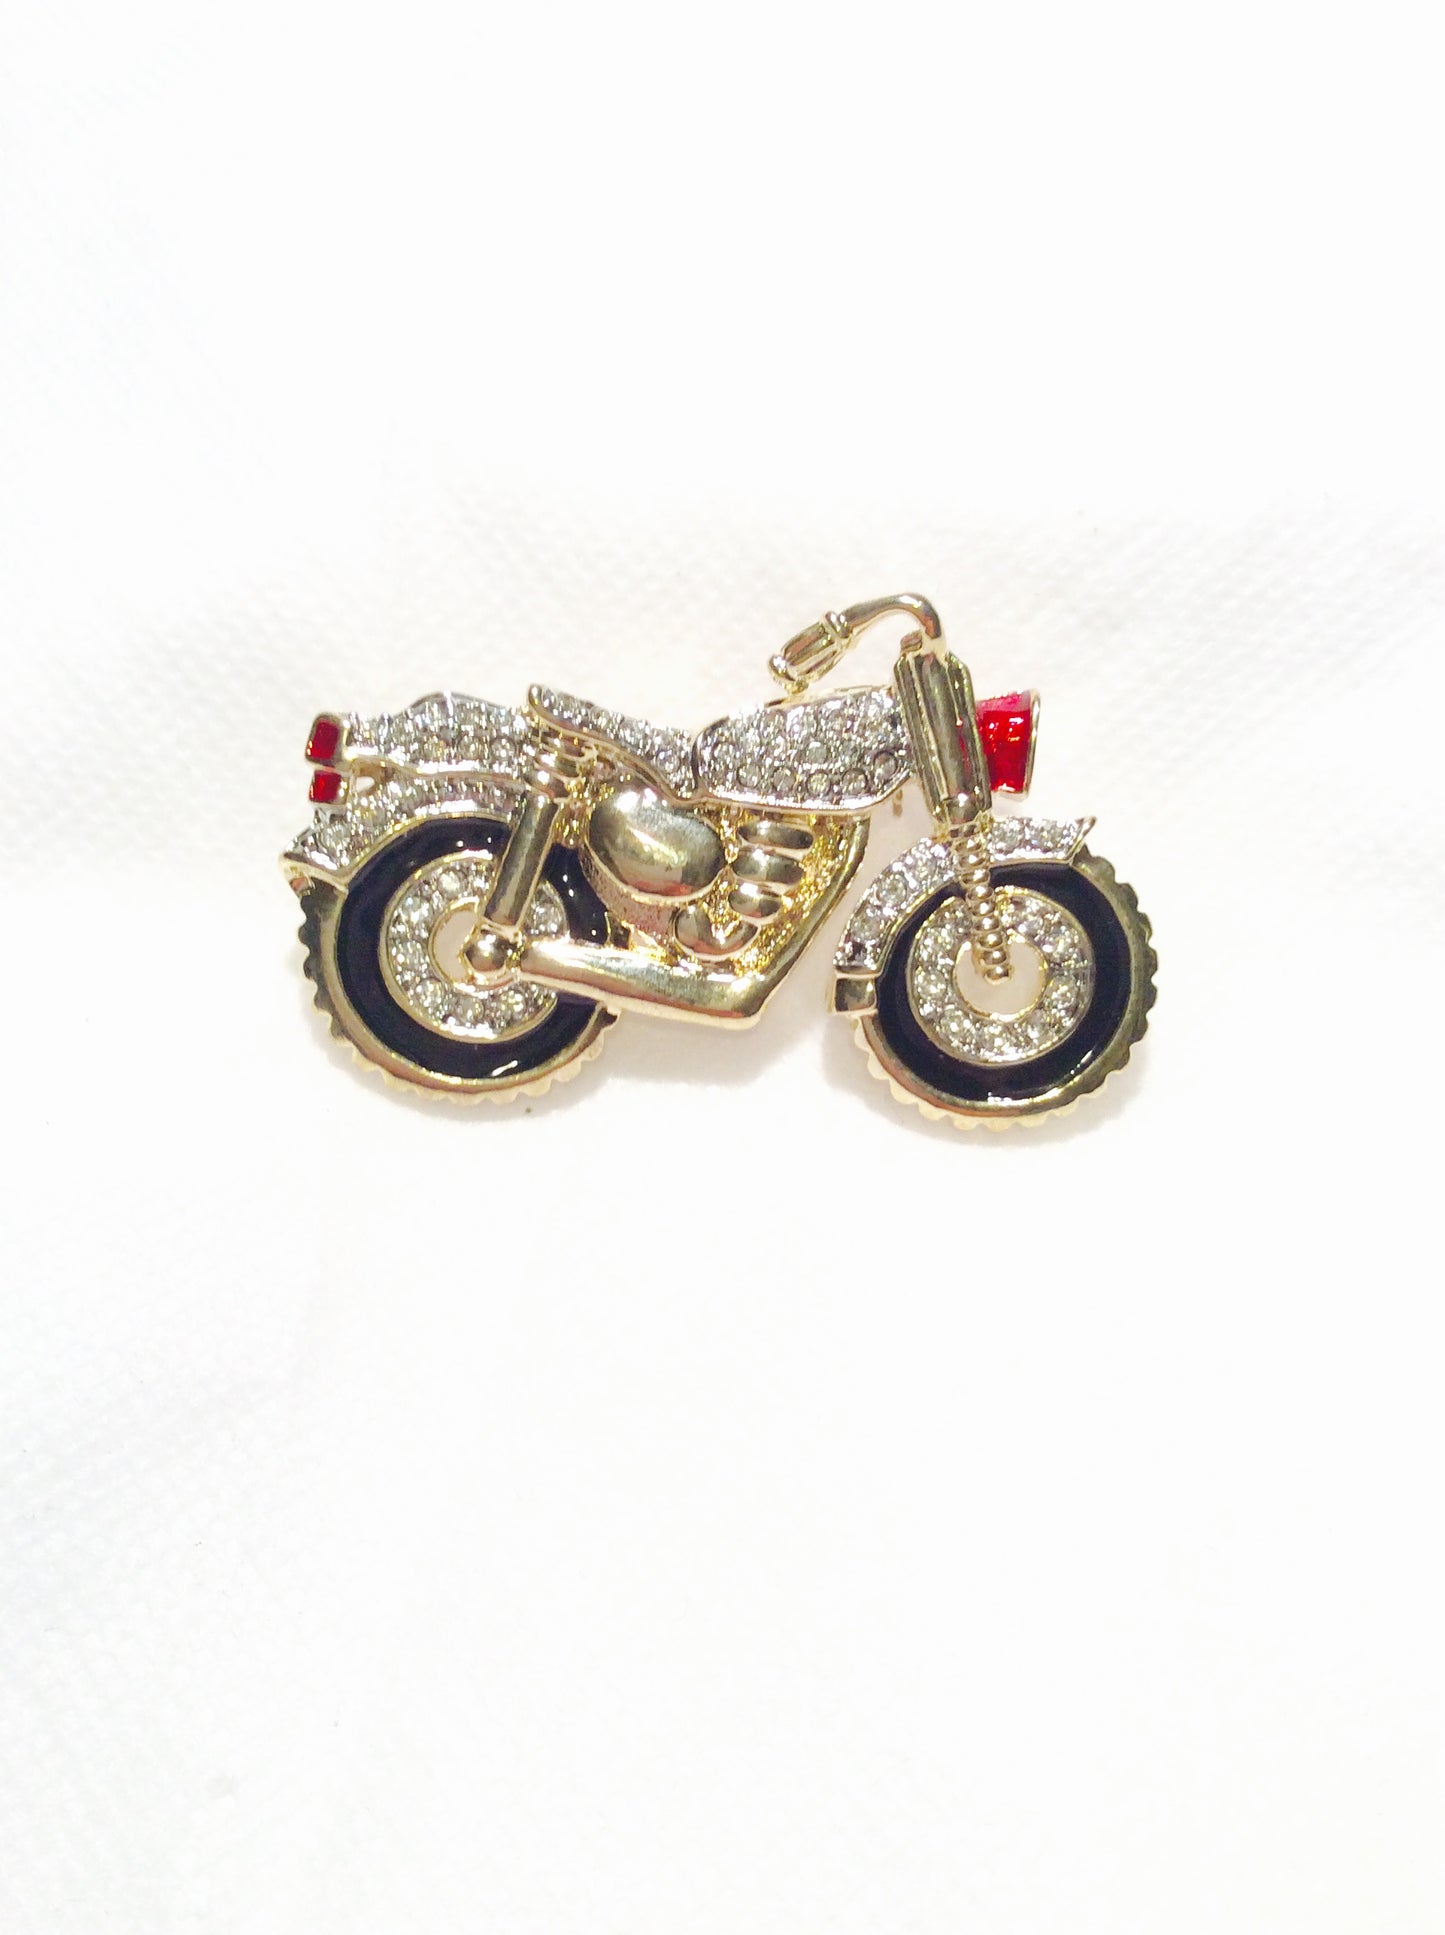 Motorcycle Pin#38-3667